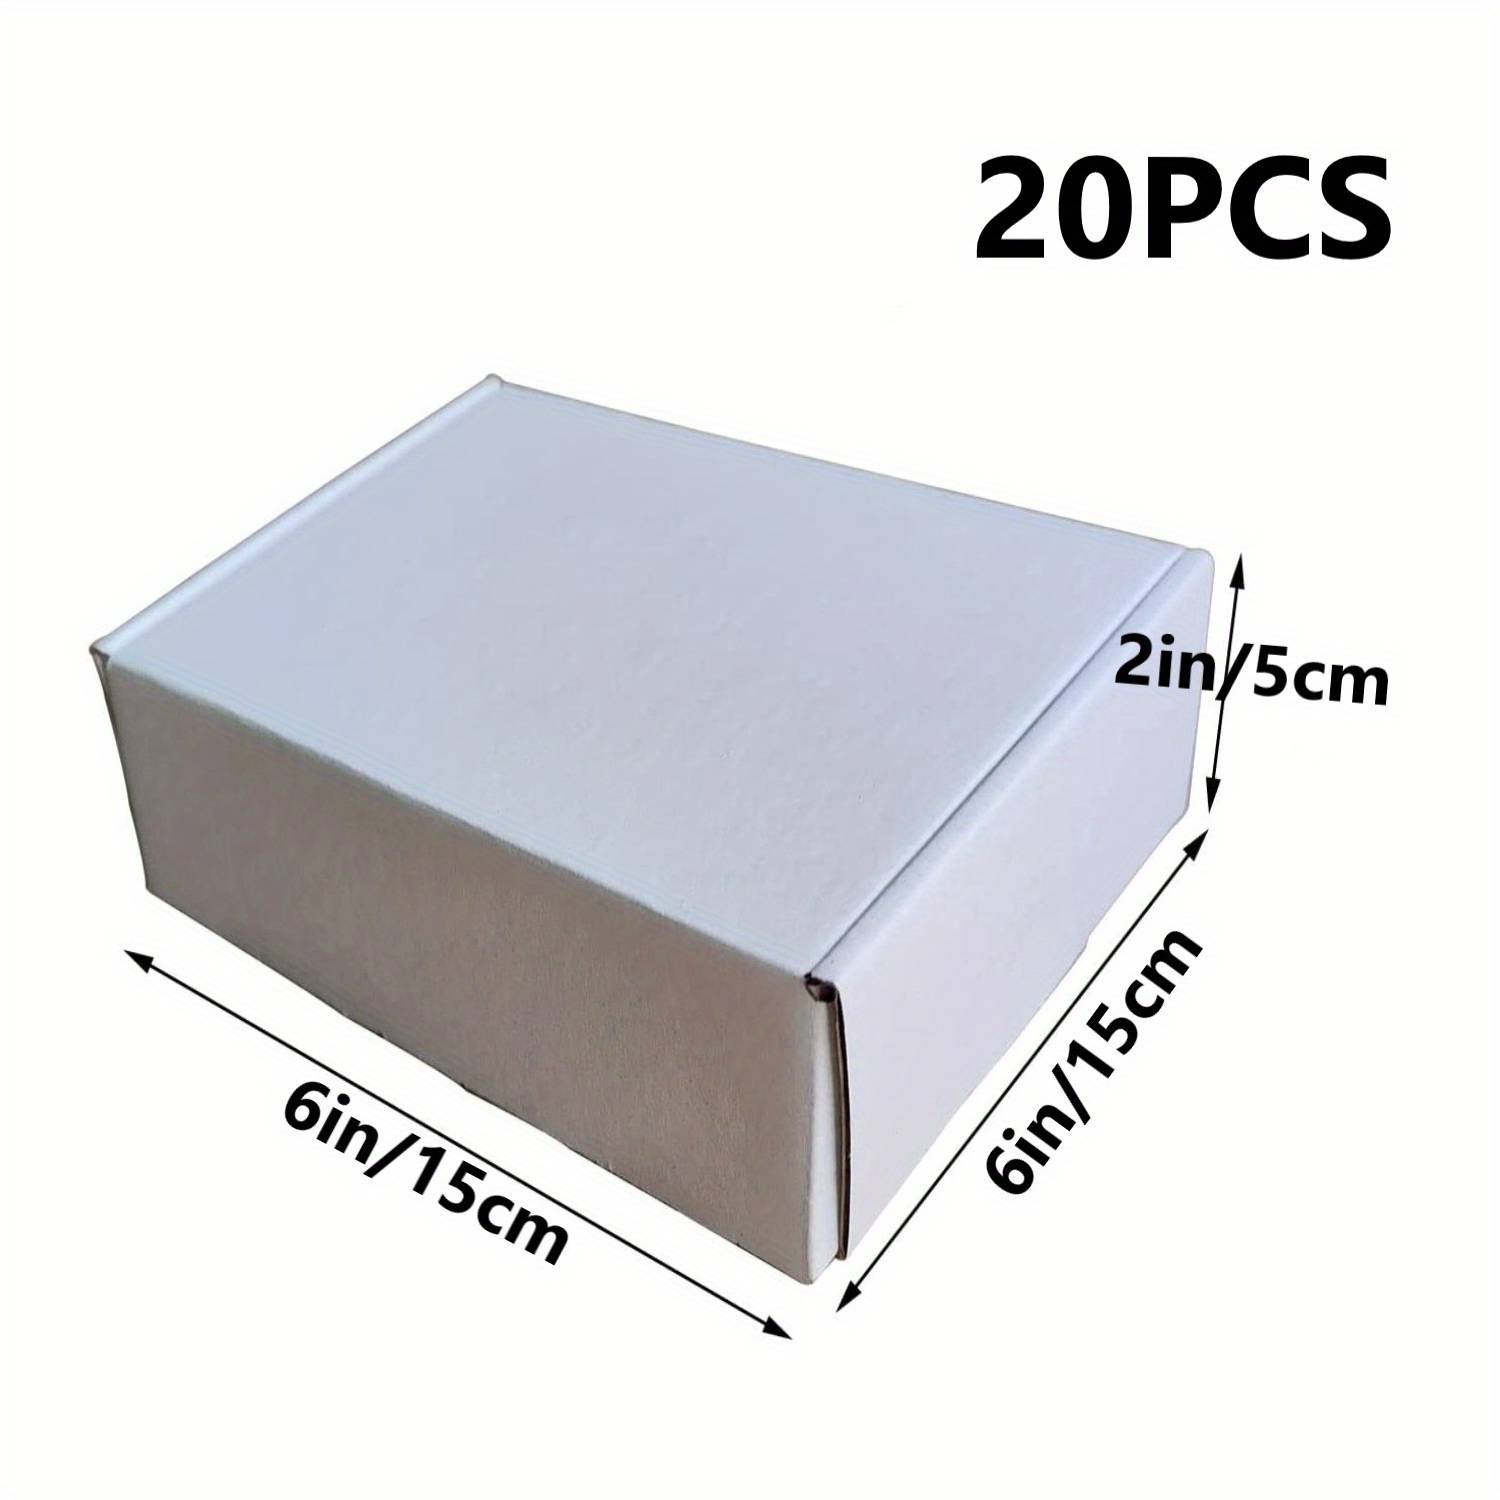 Storage Paper Box